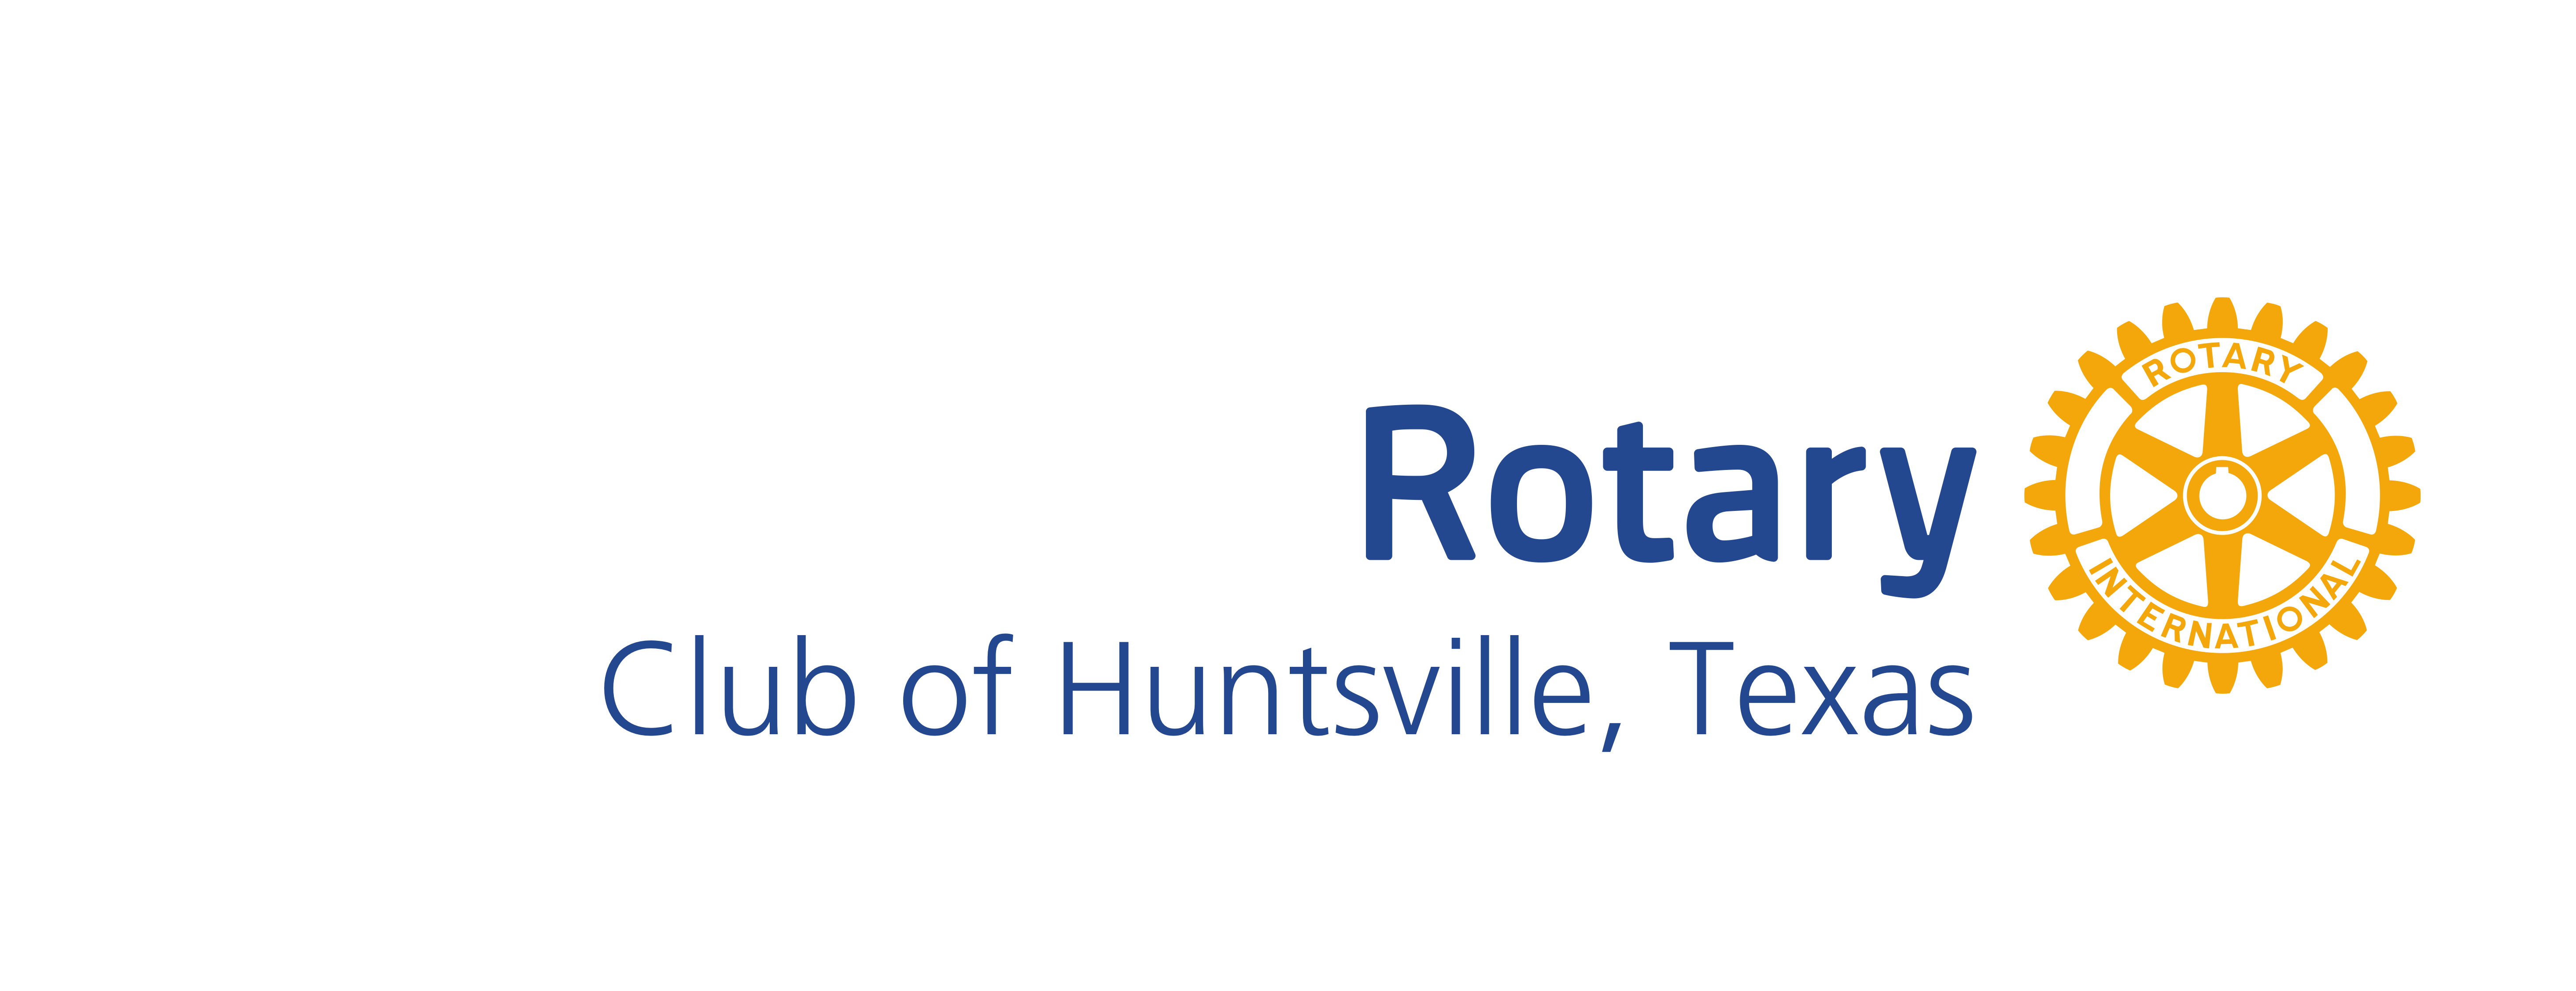 Rotary Club of Huntsville Texas Logo